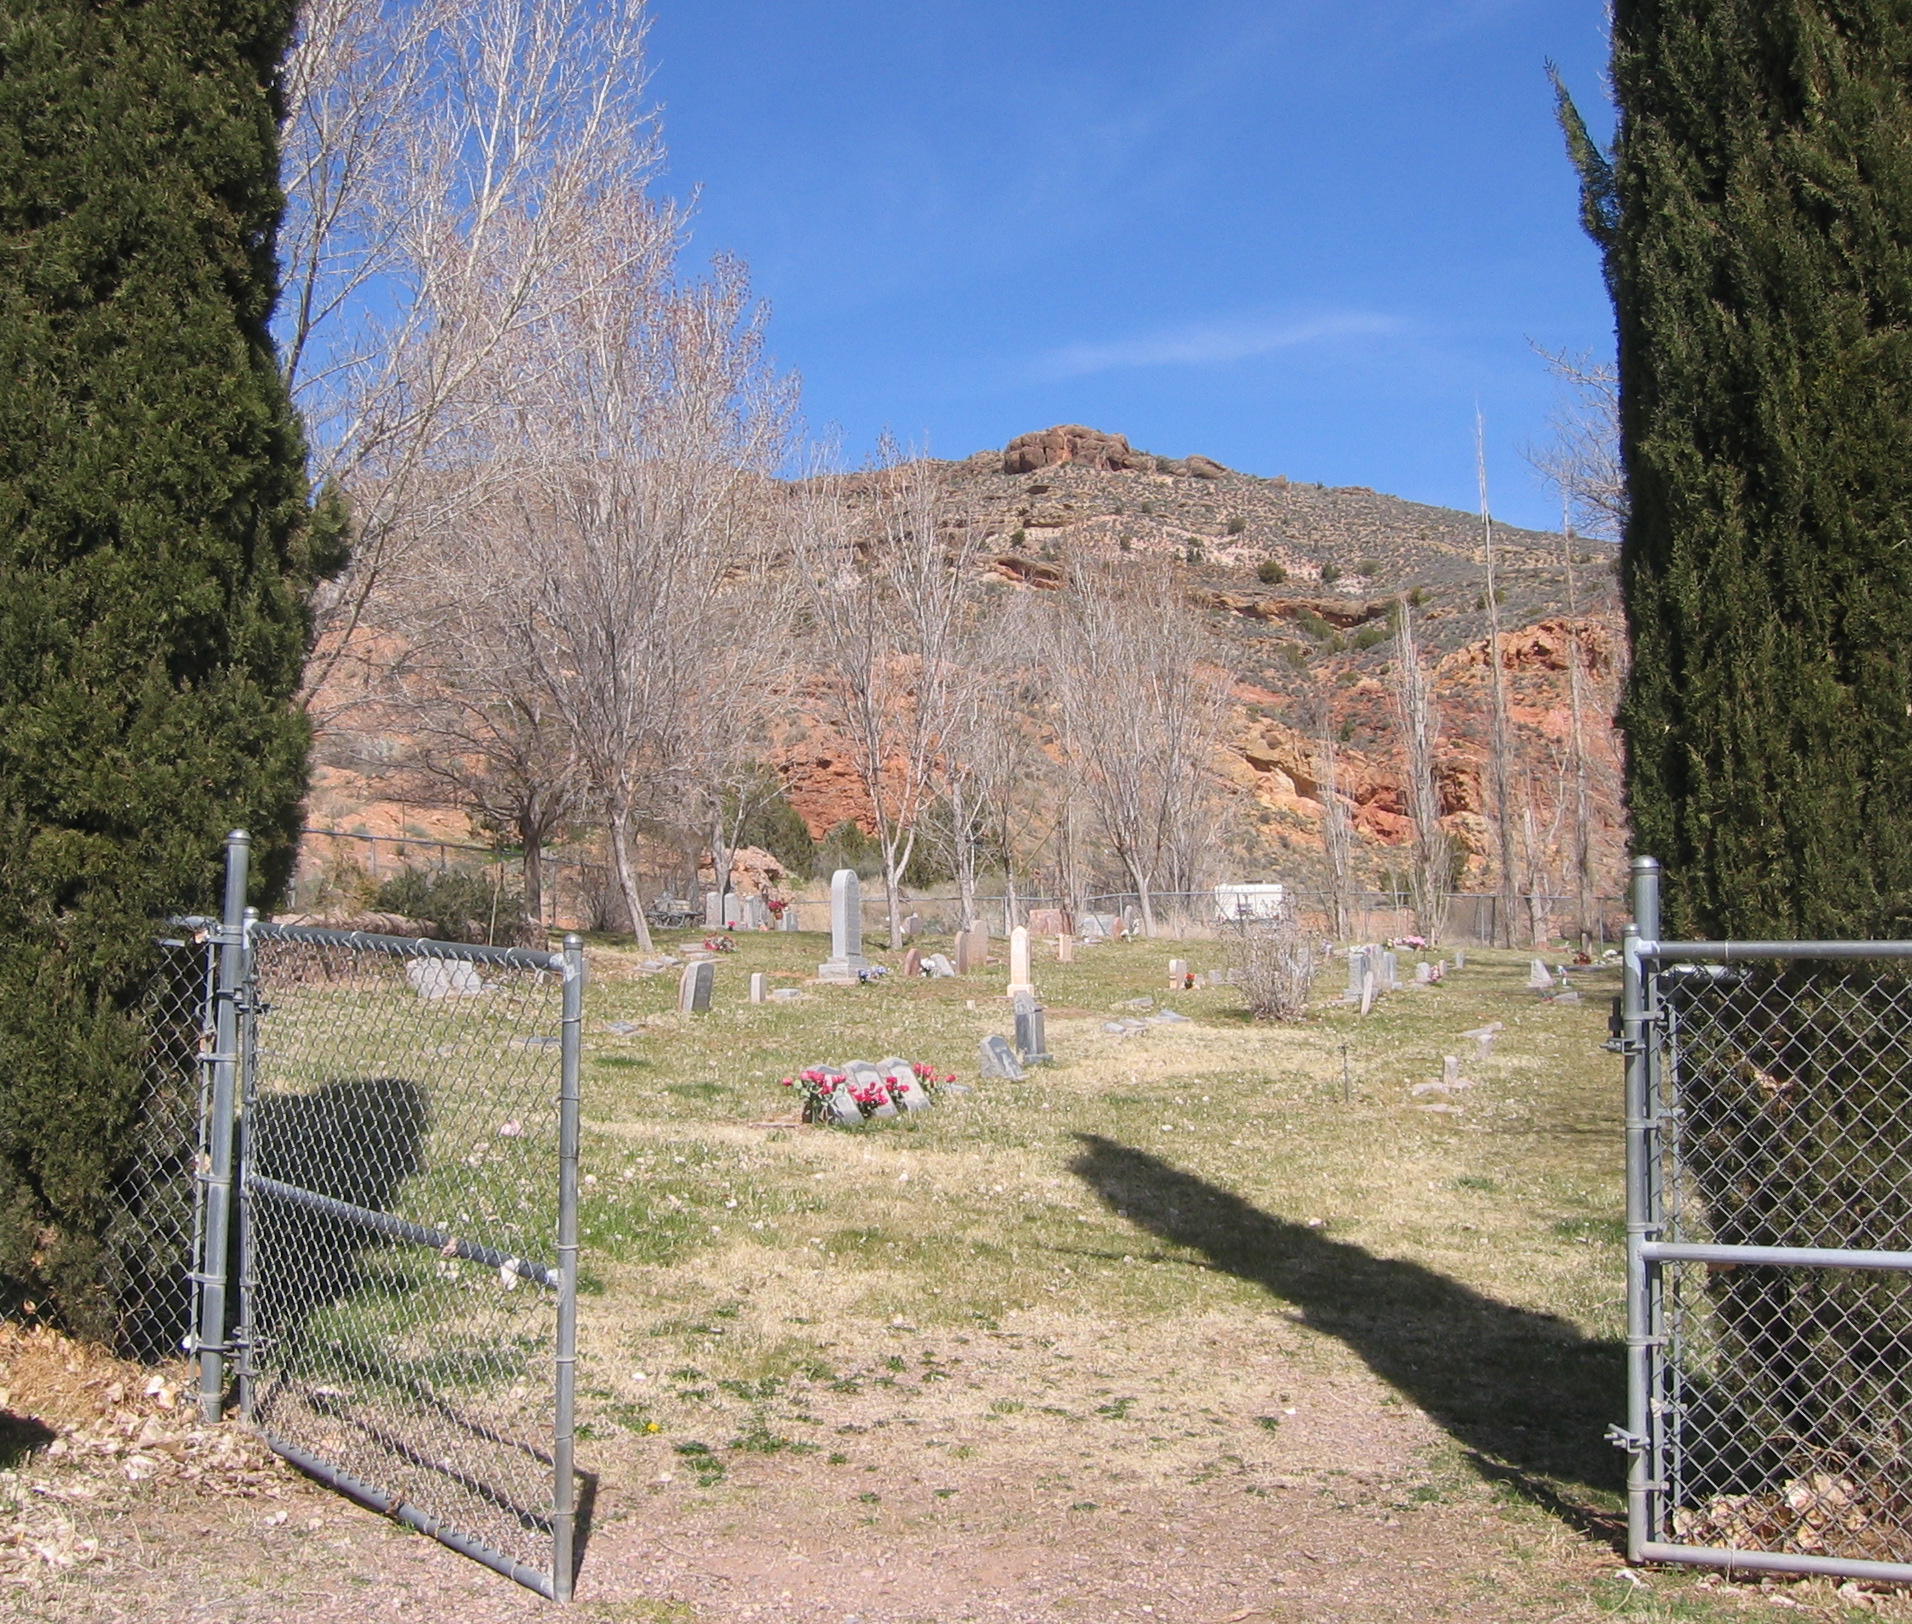 Main gate of the Gunlock Cemetery